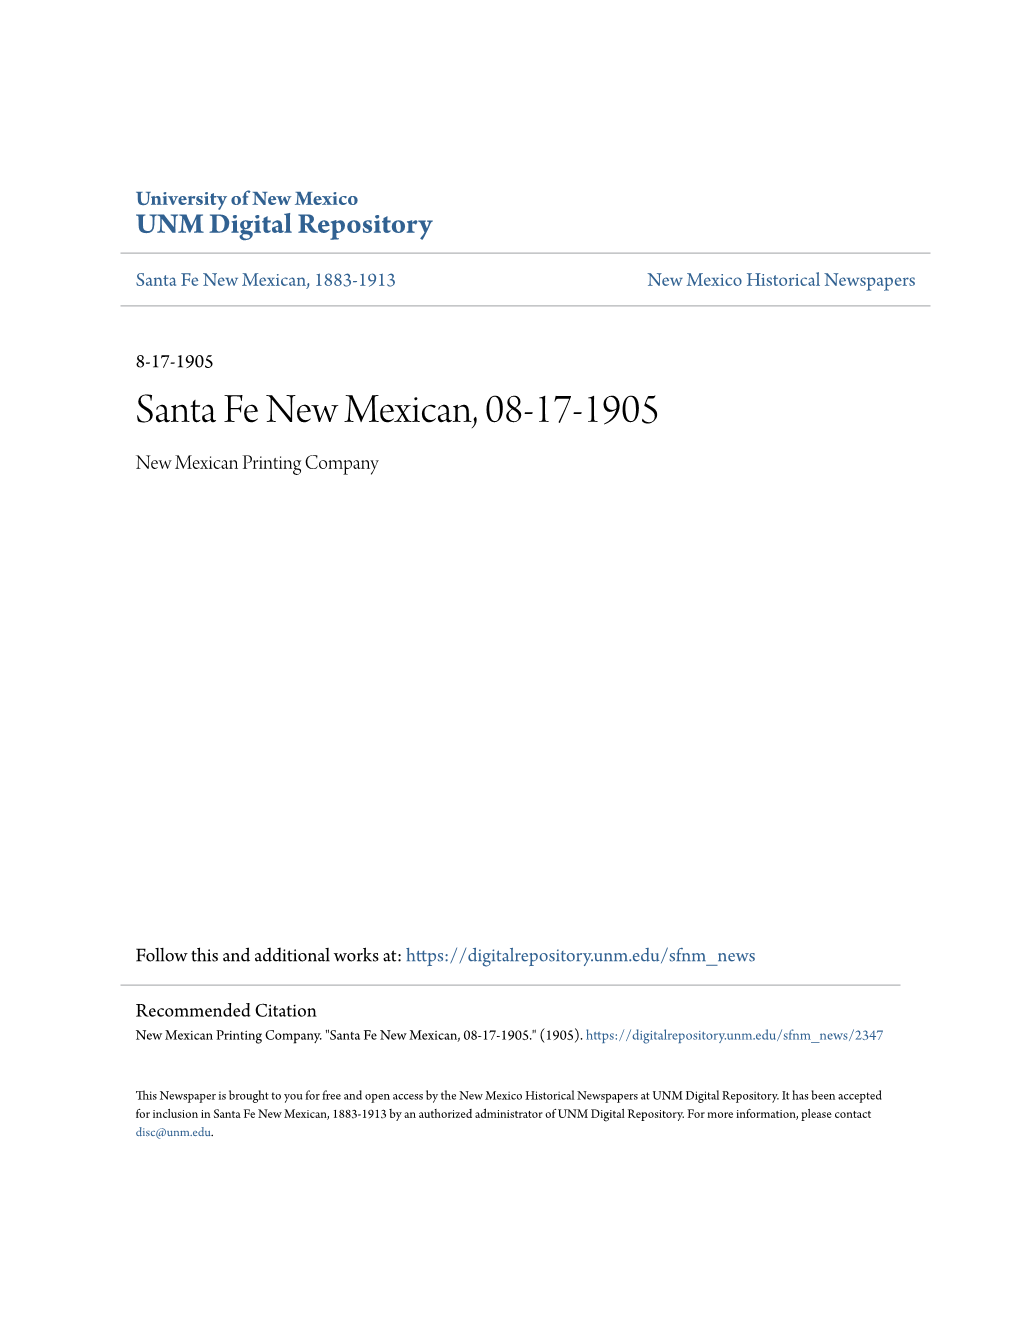 Santa Fe New Mexican, 08-17-1905 New Mexican Printing Company